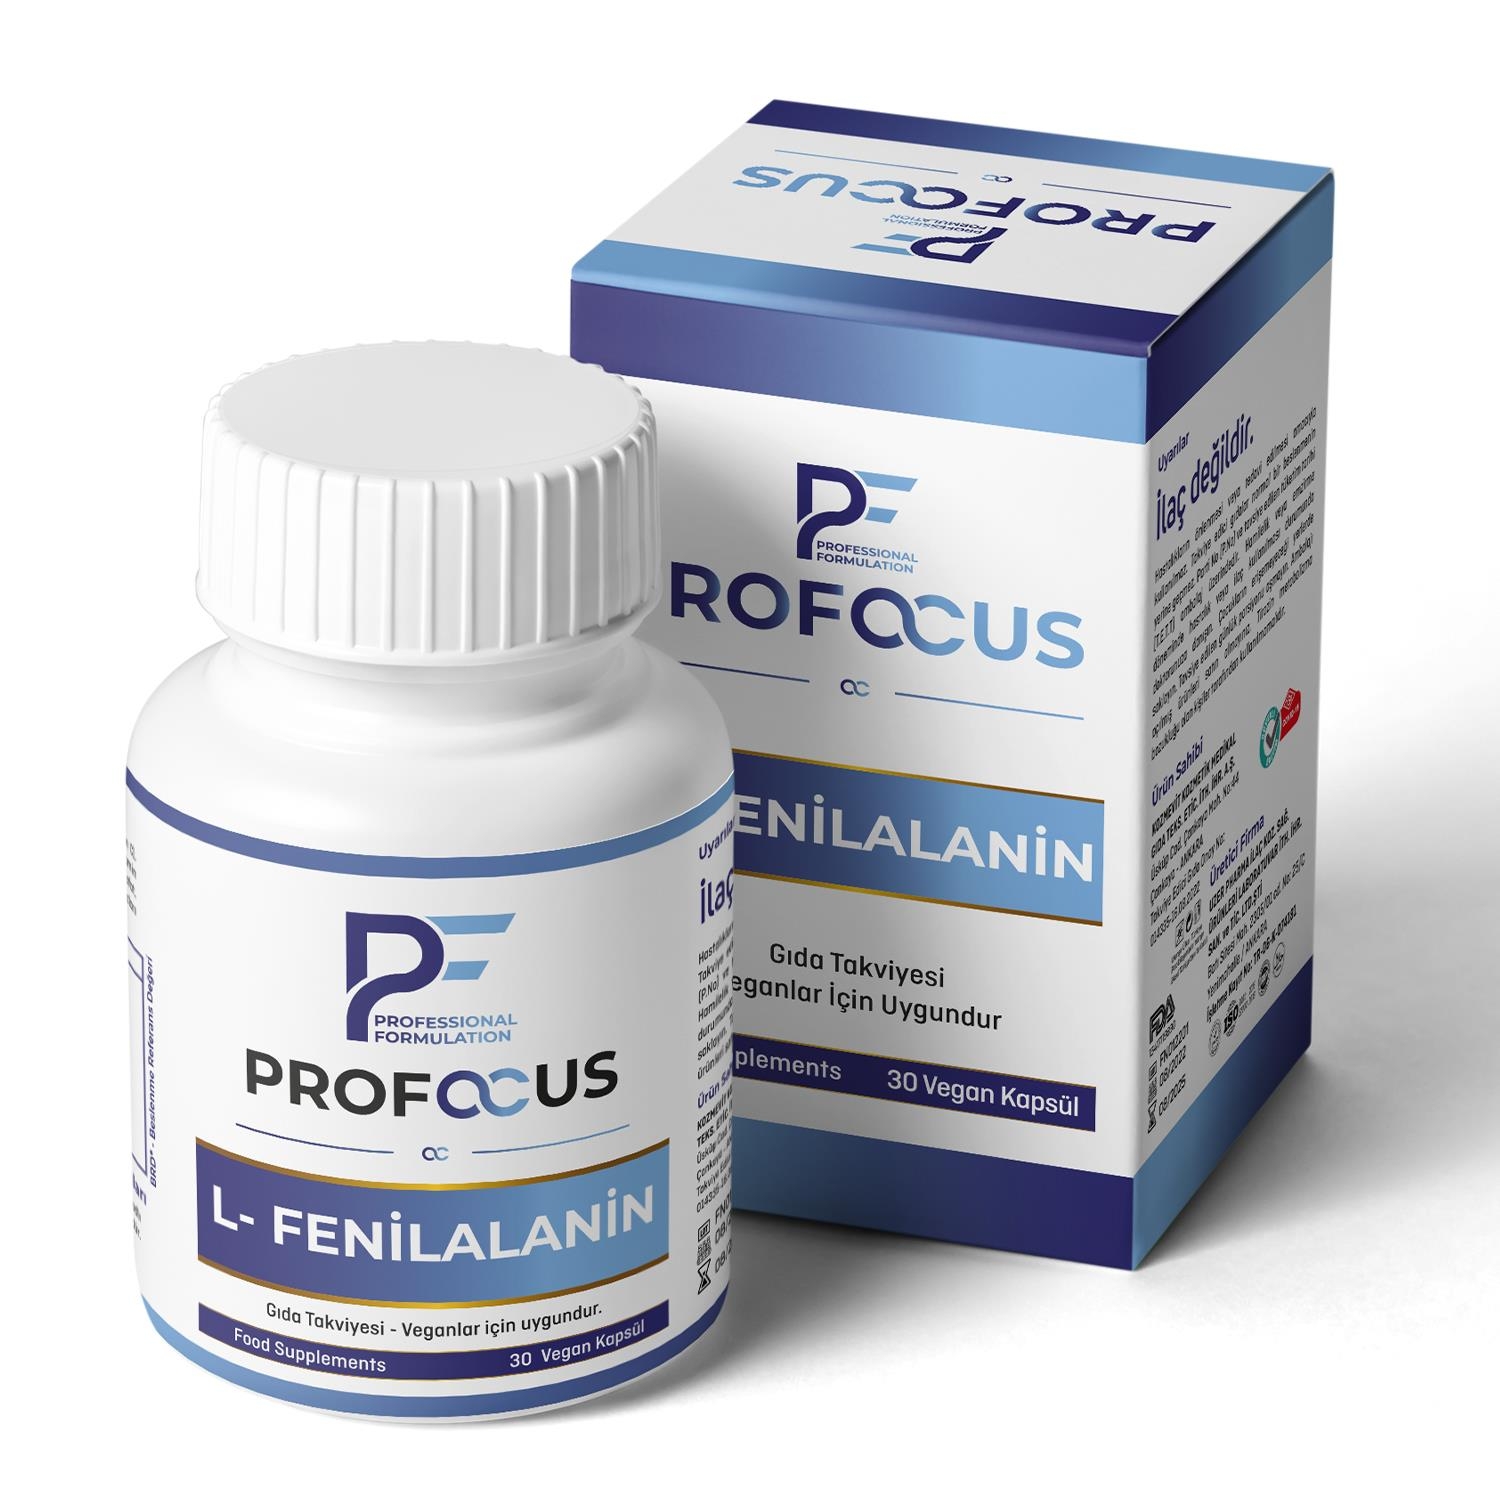 PF ProFocus L-Fenilalanin 30 Vegan Kapsül - 1